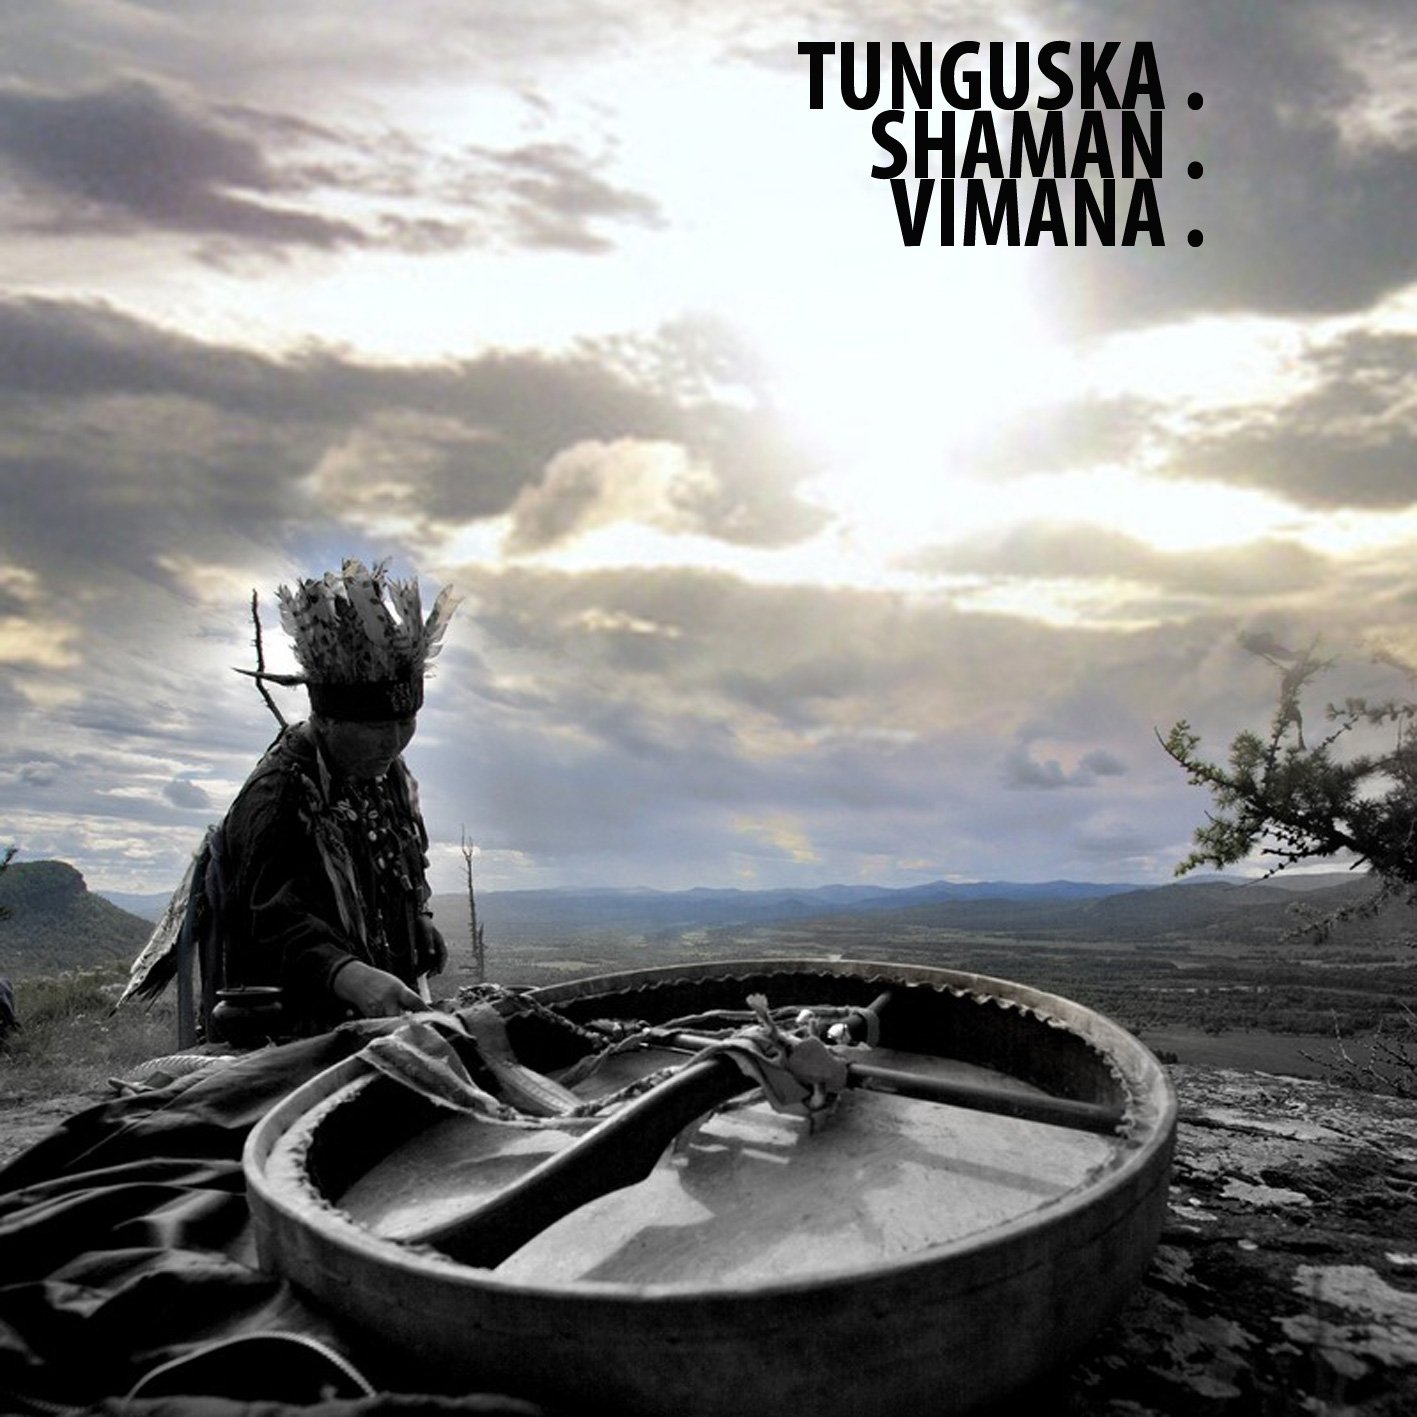 Music society. Tunguska Electronic Music. Treat обложки альбомов Tunguska. Shepherd's Wind - Tunguska Electronic Music Society. Shaman электронная музыка.